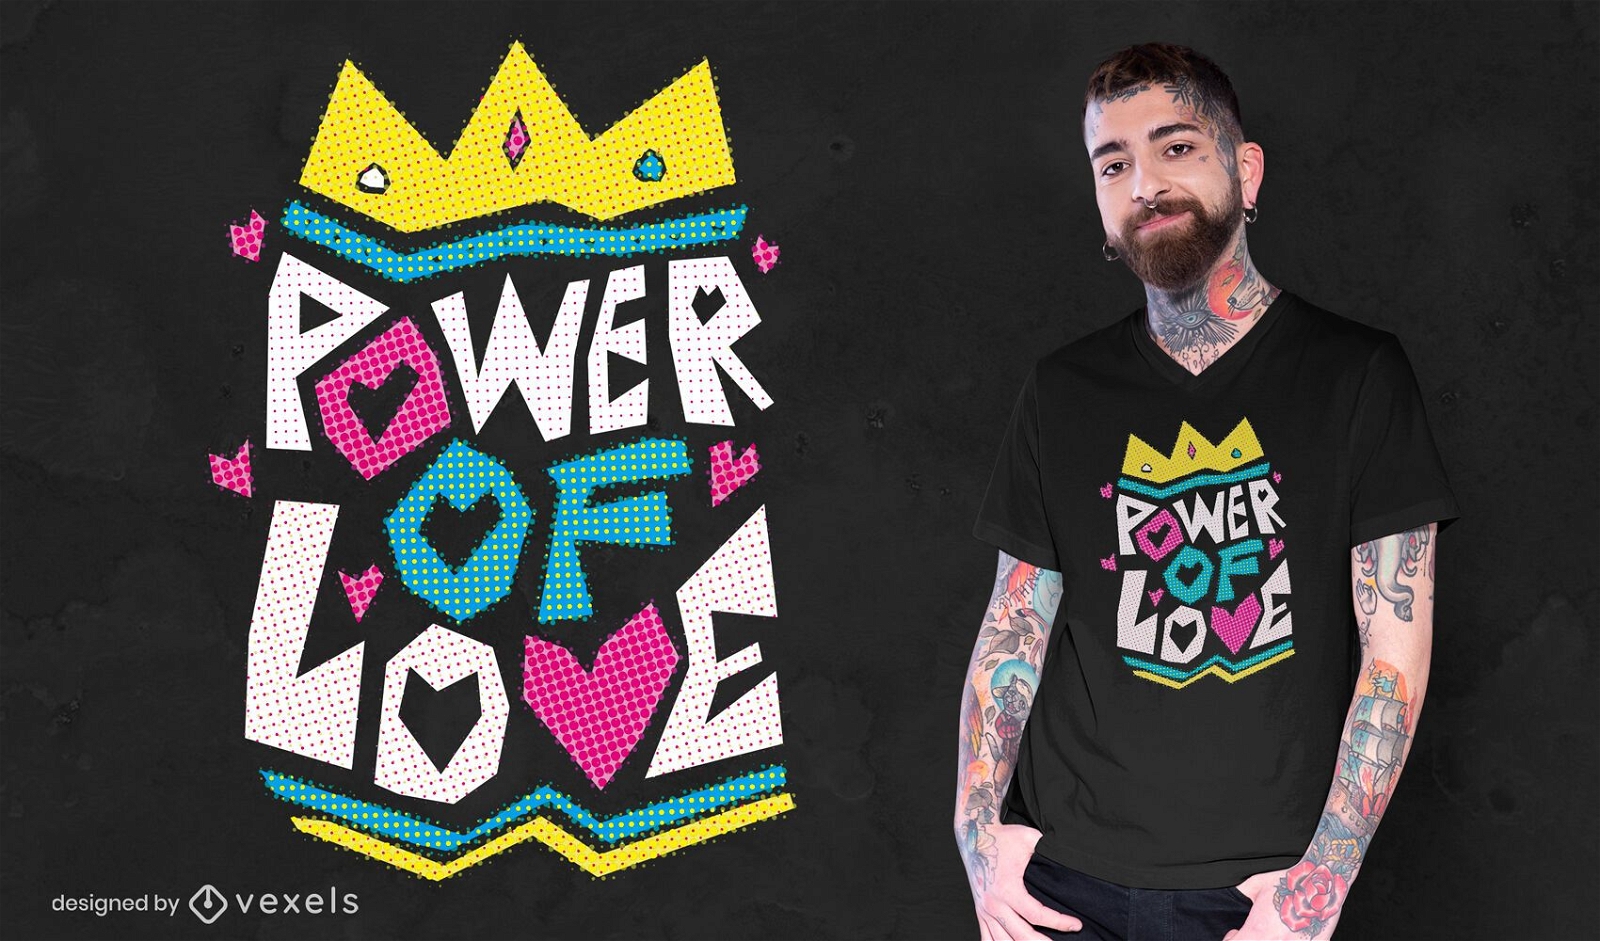 Power of love t-shirt design